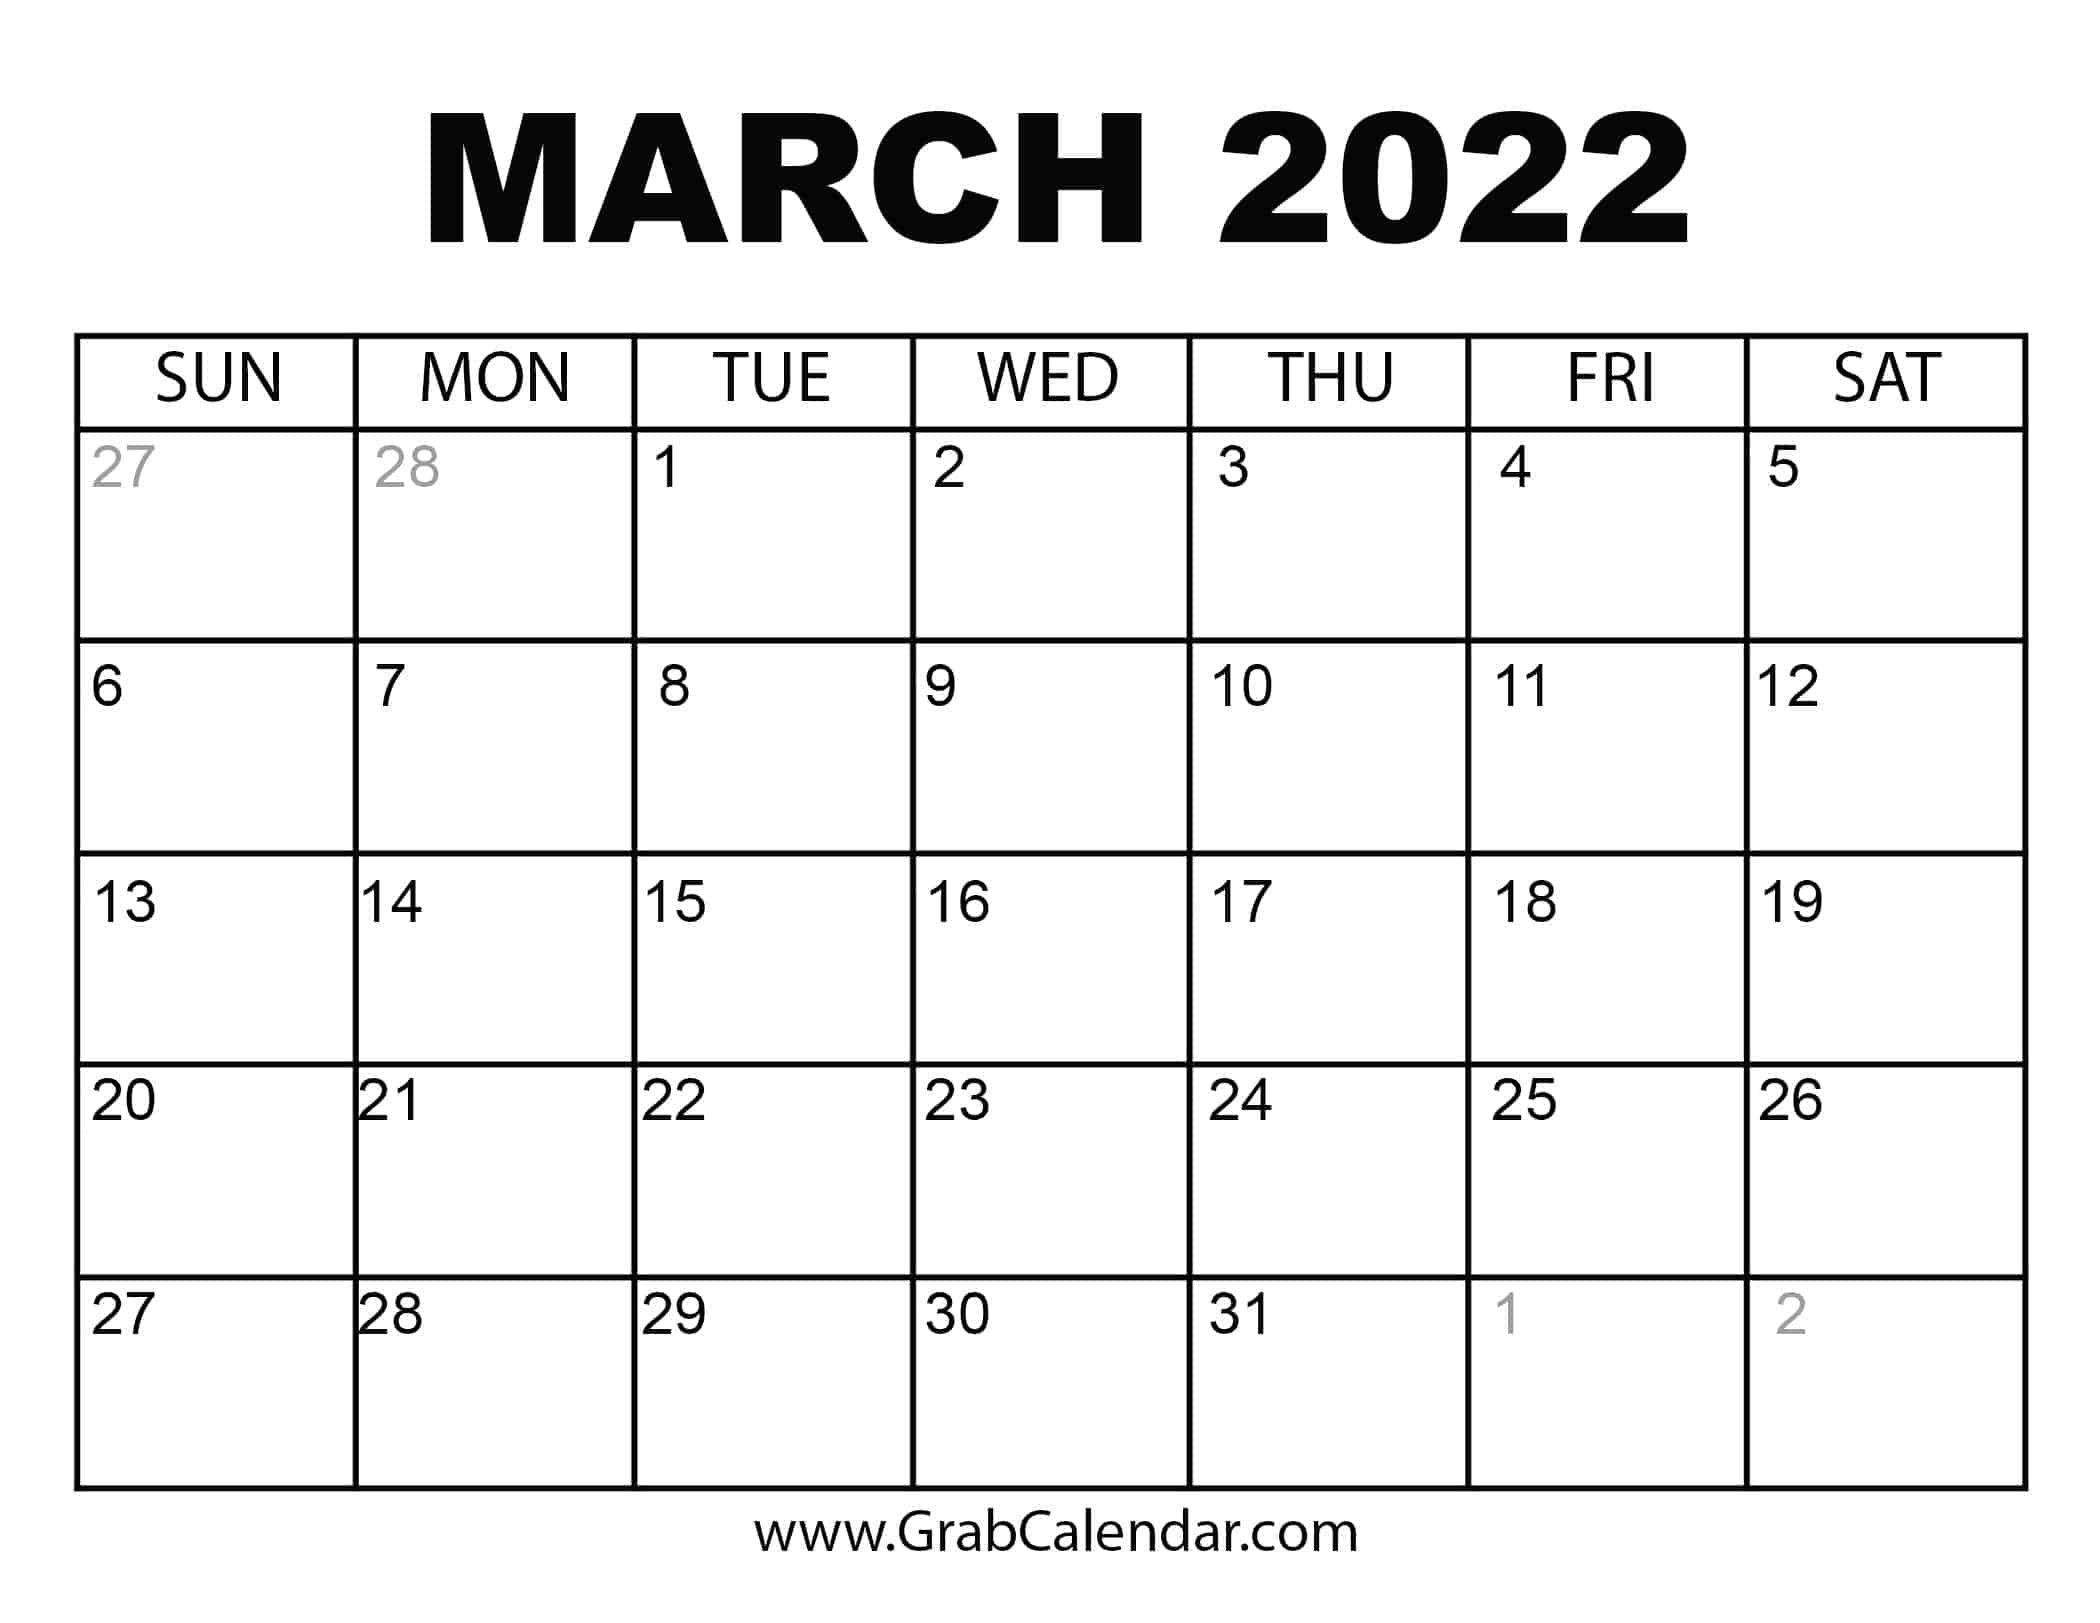 March 2022 Blank Calendar Free Printable Calendar 2022 - Grab Calendar